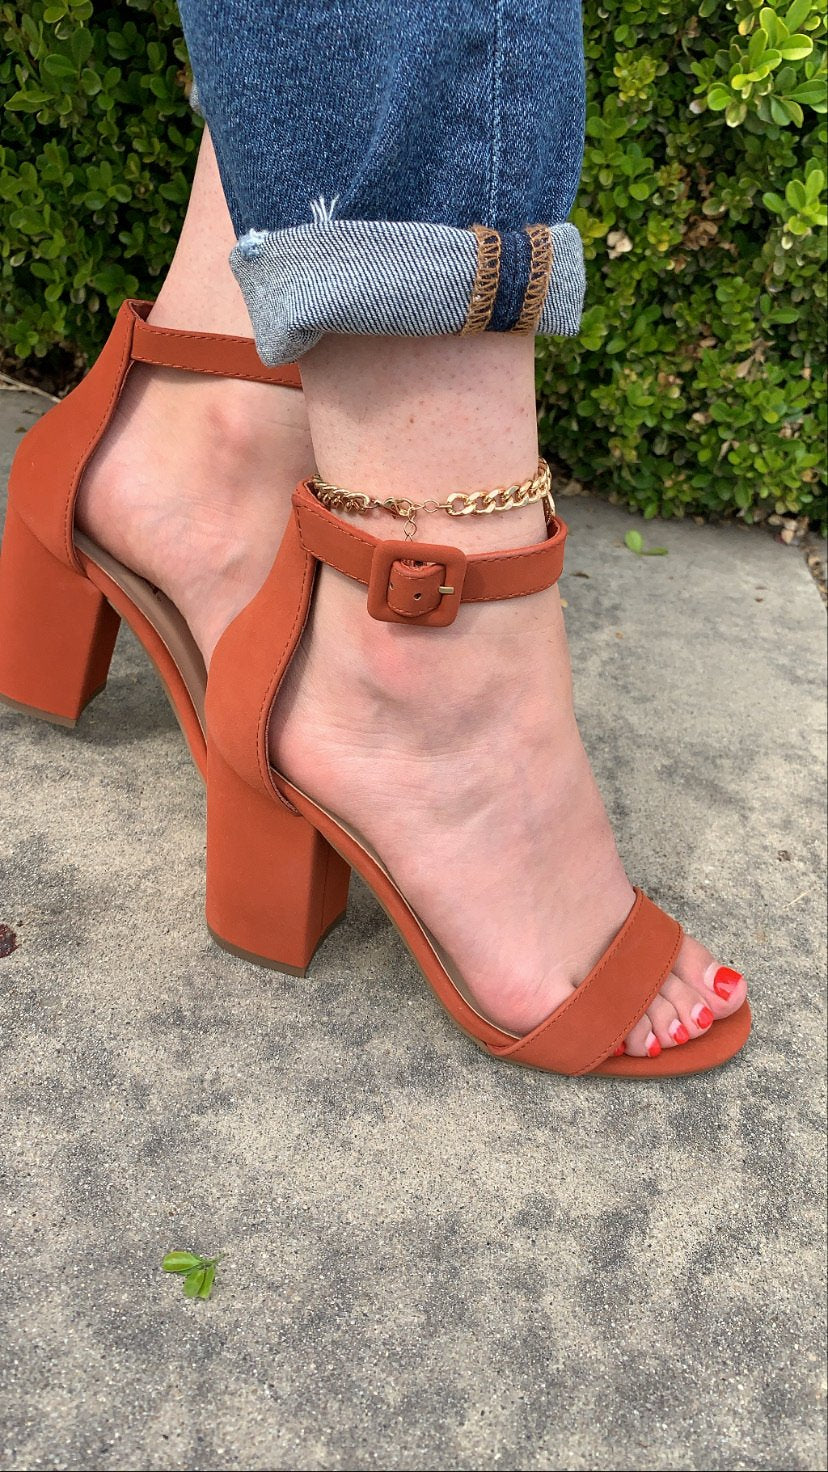 Choice heels